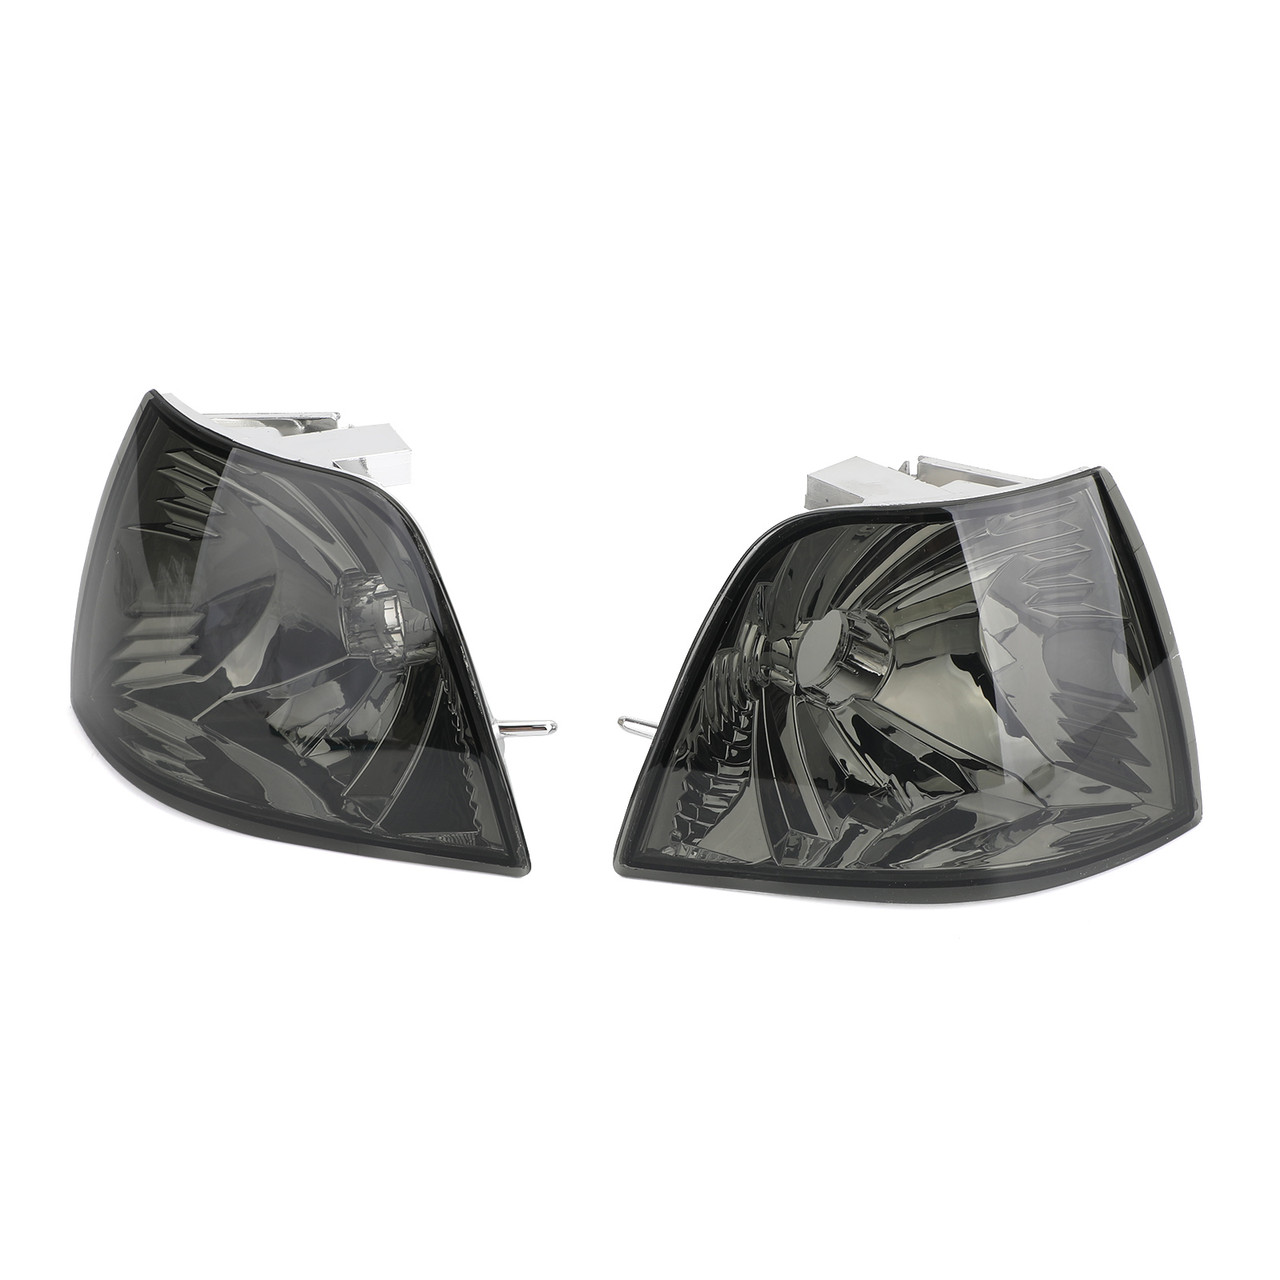 Smoke Corner Lights Parking Lamps PAIR Fits For BMW 3-Series E36 4DR 92-98 Smoke